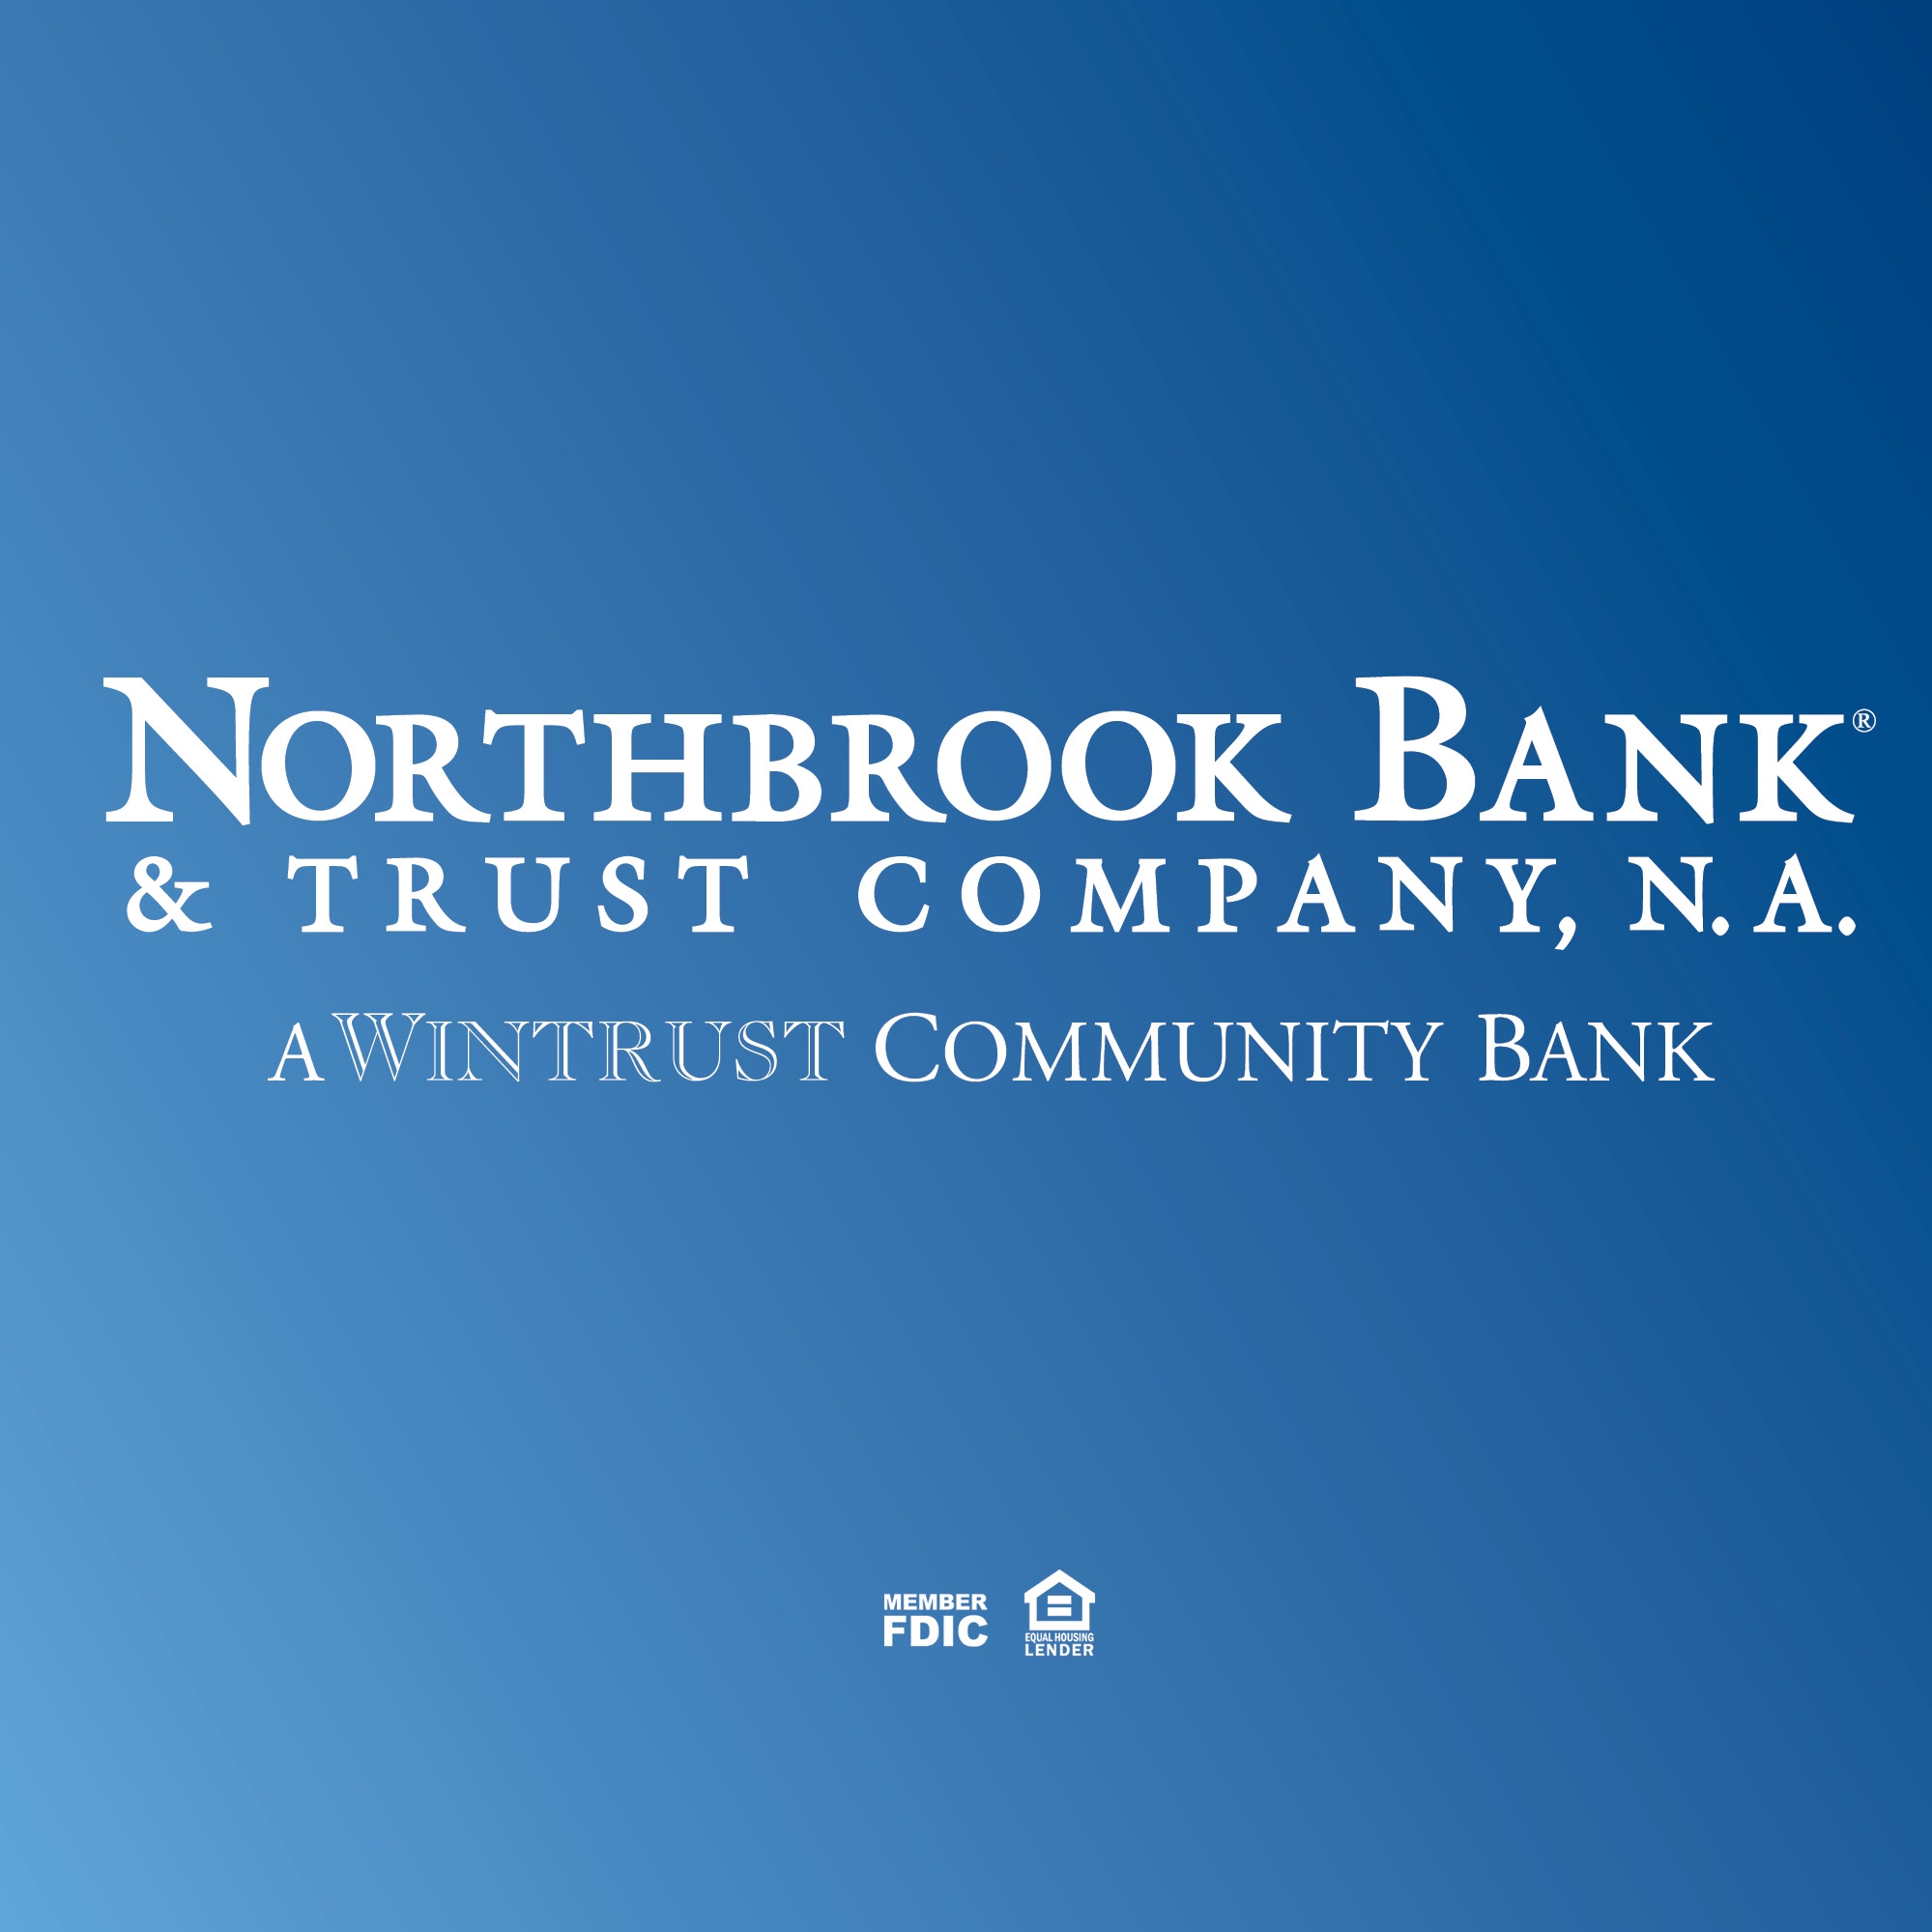 Northbrook Bank & Trust Company N.A